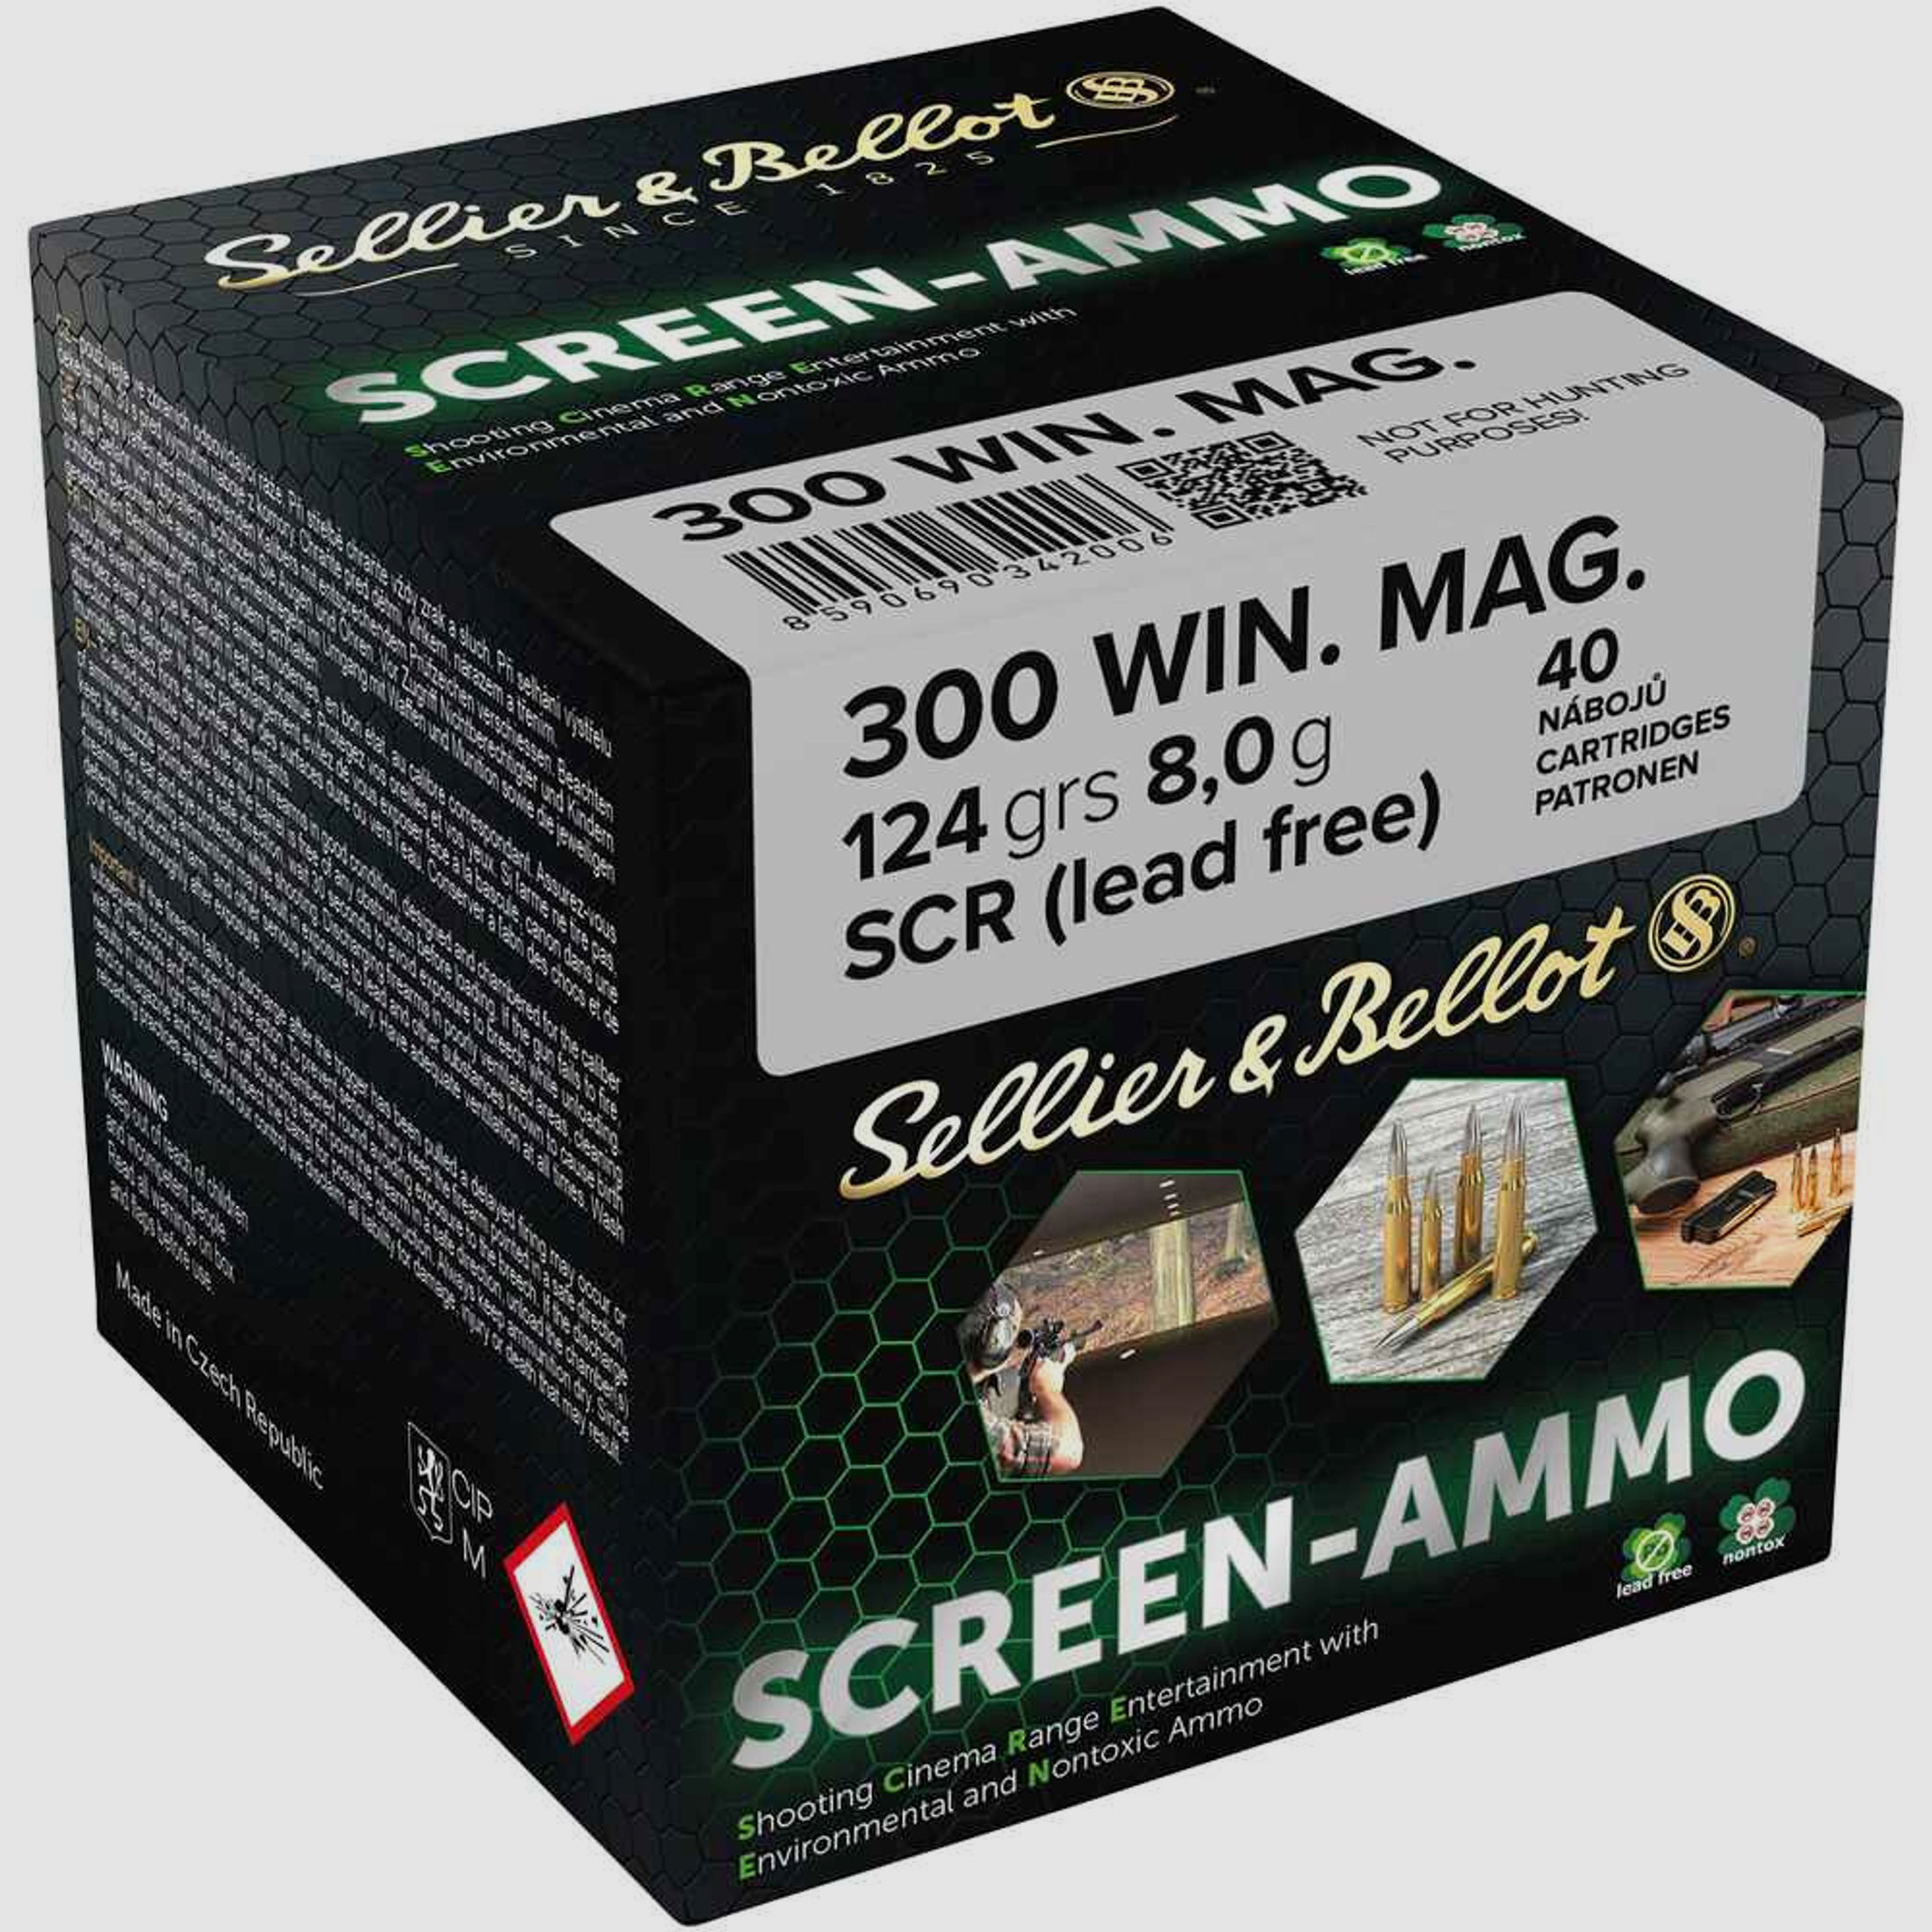 Sellier & Bellot 300WinMag. 124grs Screen-Ammo 40STK Munition bleifrei